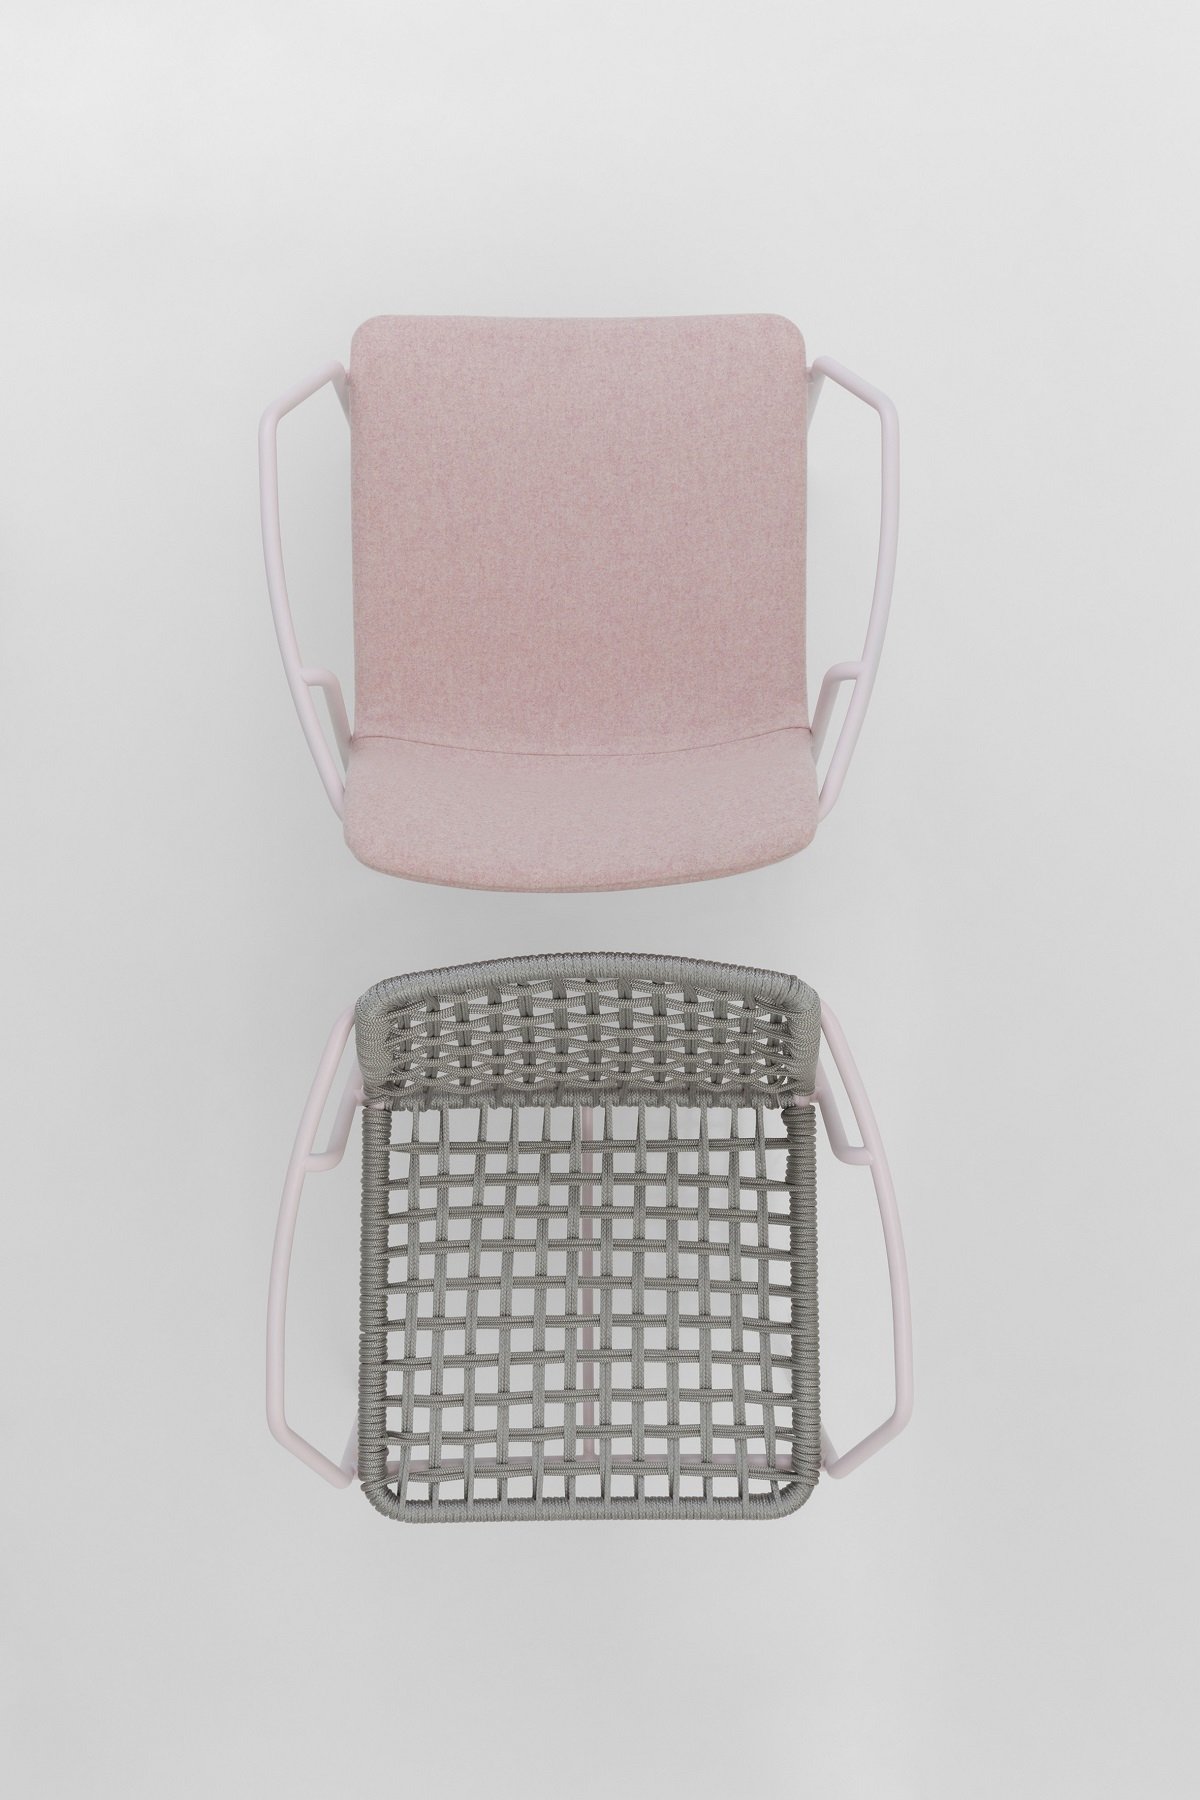 Sey Armchair from Billiani, designed by Emilio Nanni